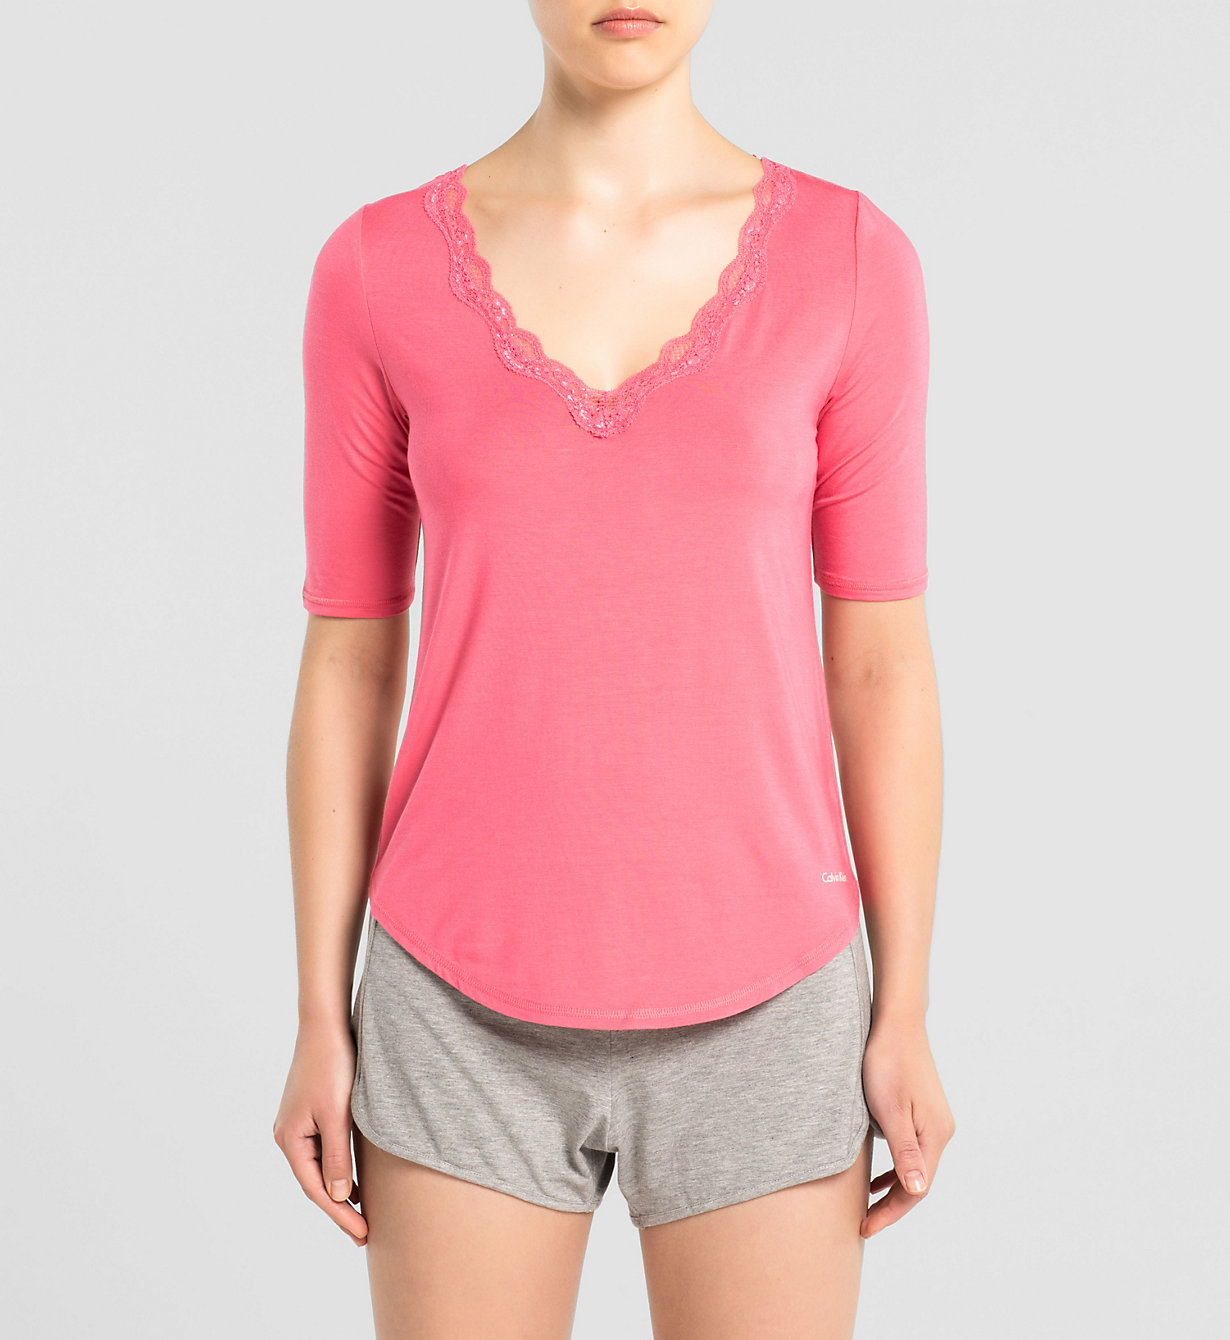 Dámské tričko Lace Trim Top QS5661E - Calvin Klein - Růžová/S